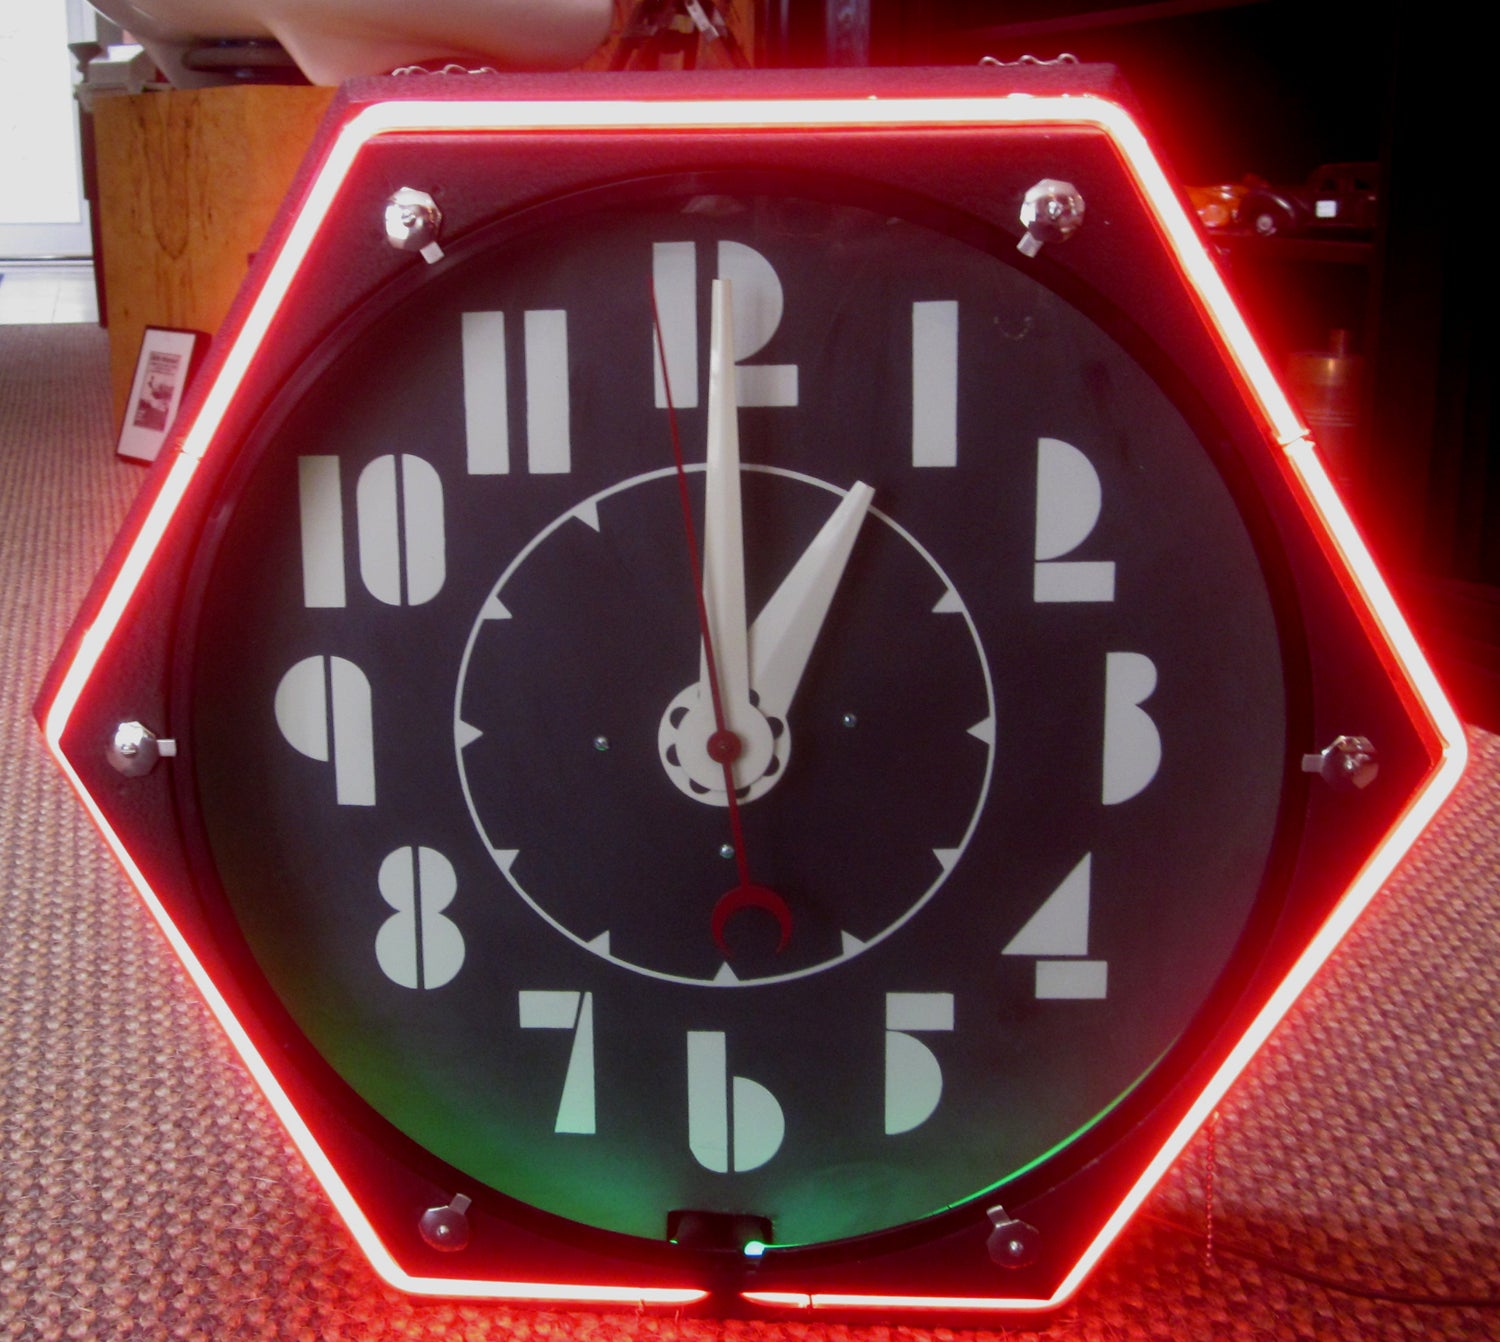 Art Deco Hexagon Neon Wall Clock